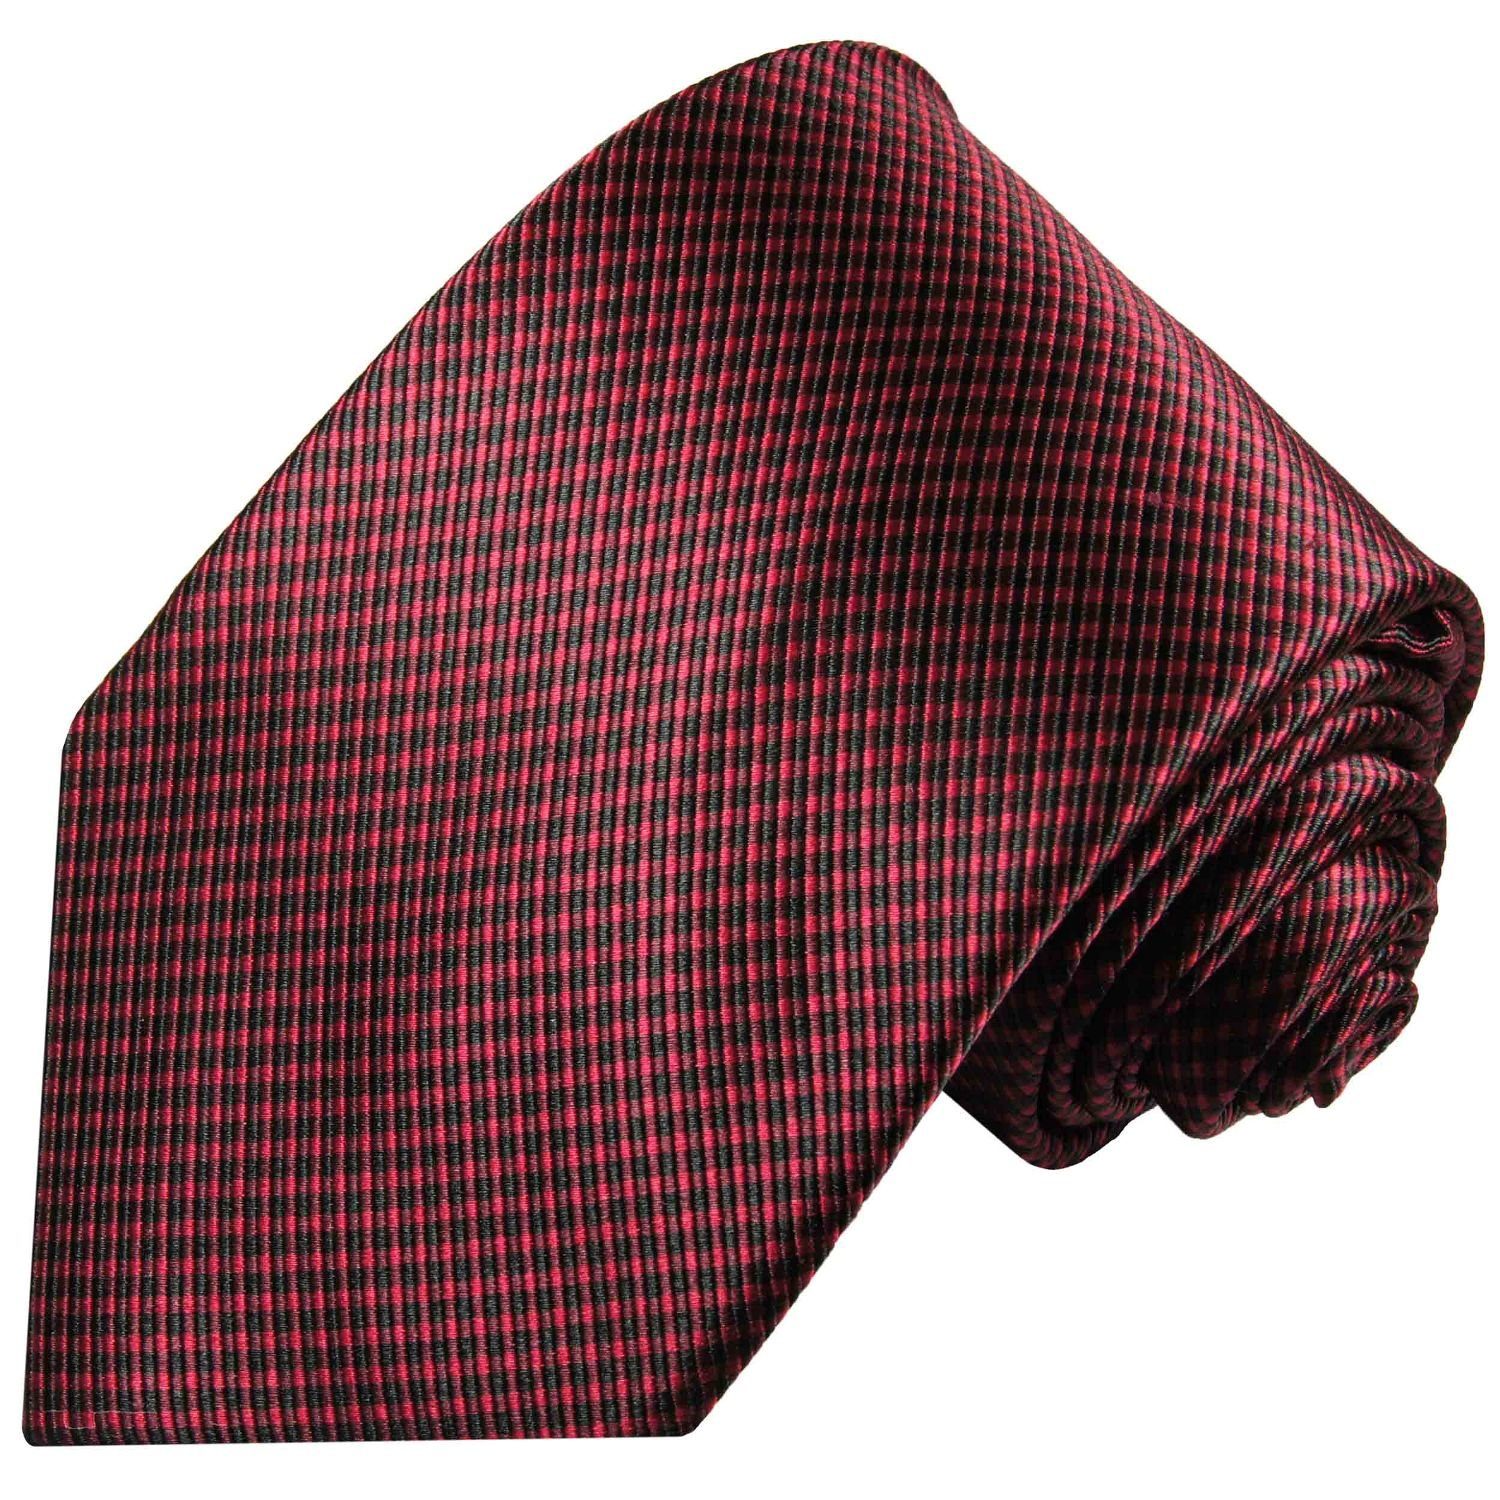 Paul Designer 450 Breit Herren (8cm), schwarz Seide (165cm), Malone rot kariert Schlips Extra Krawatte 100% lang Seidenkrawatte modern